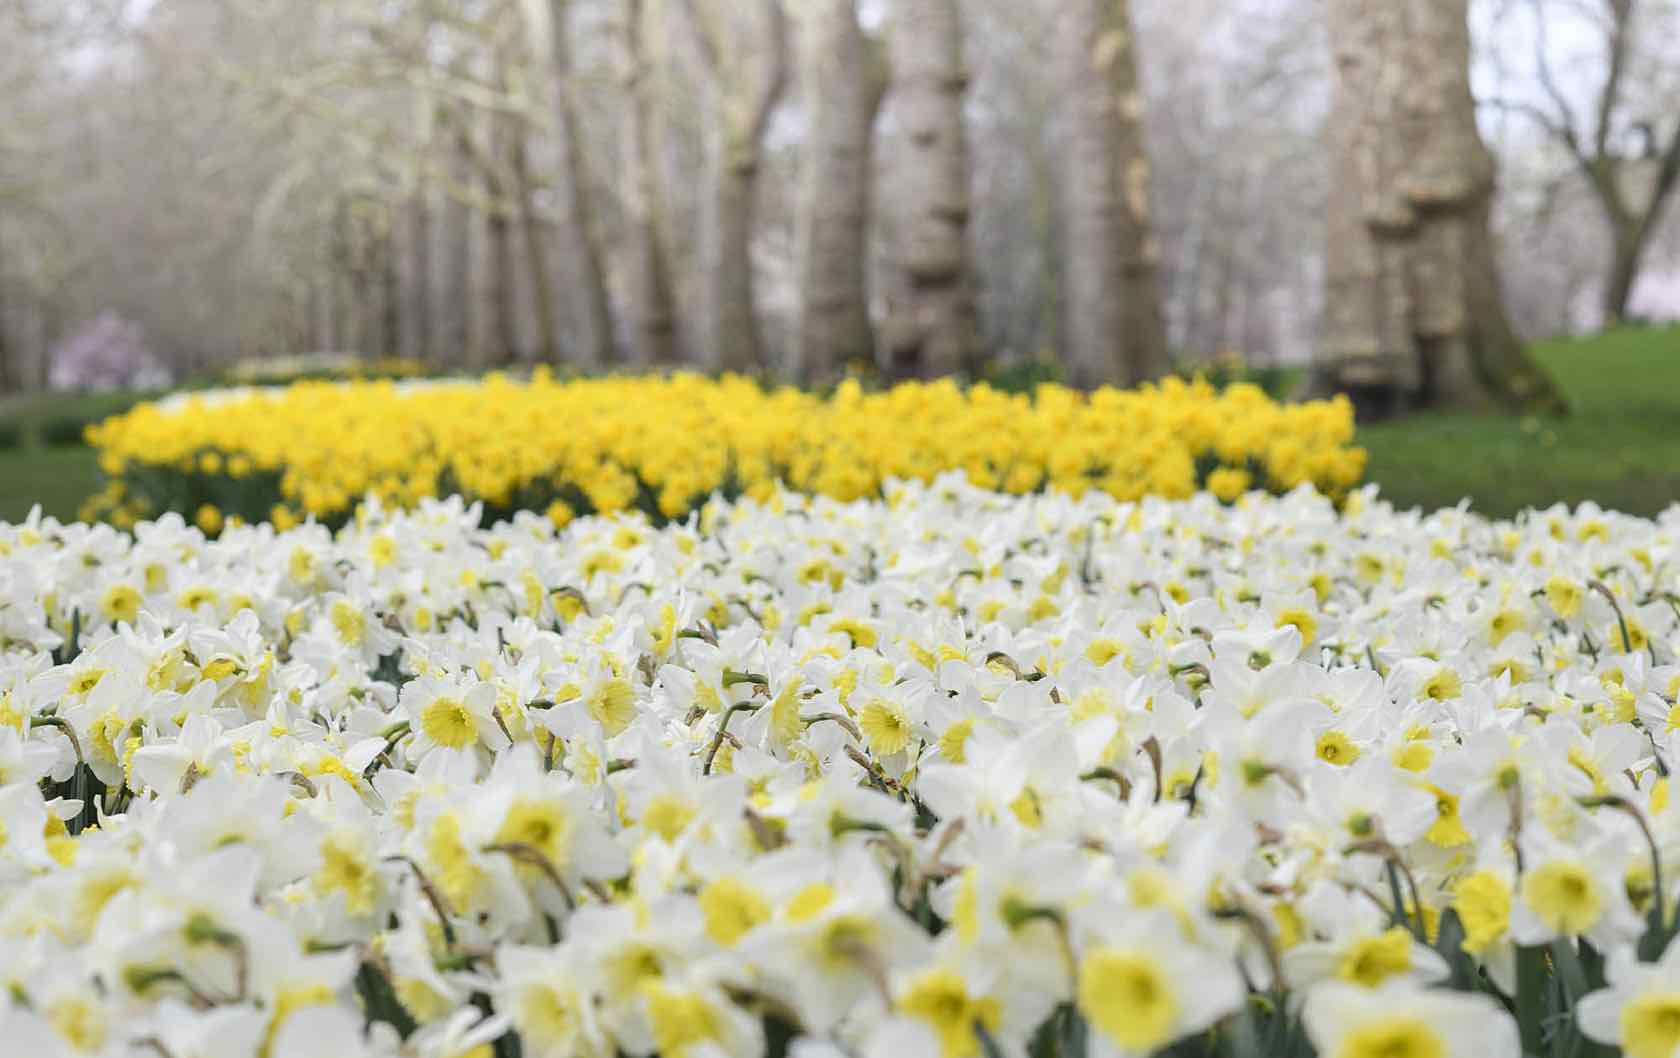 London in spring flowers in park